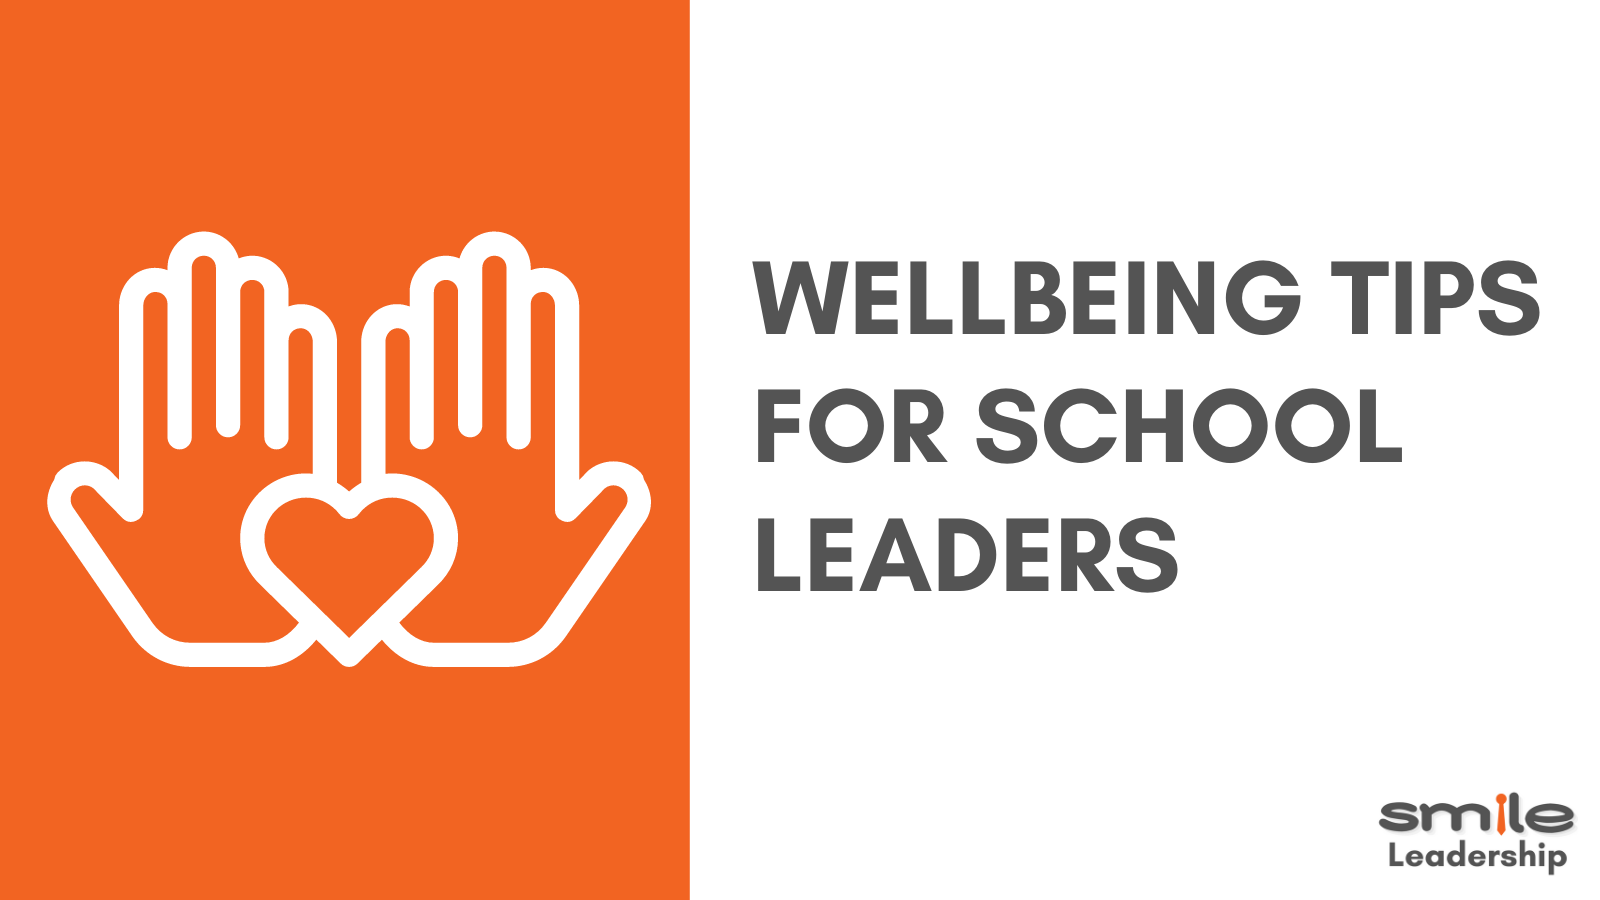 Wellbeing tips for school leaders